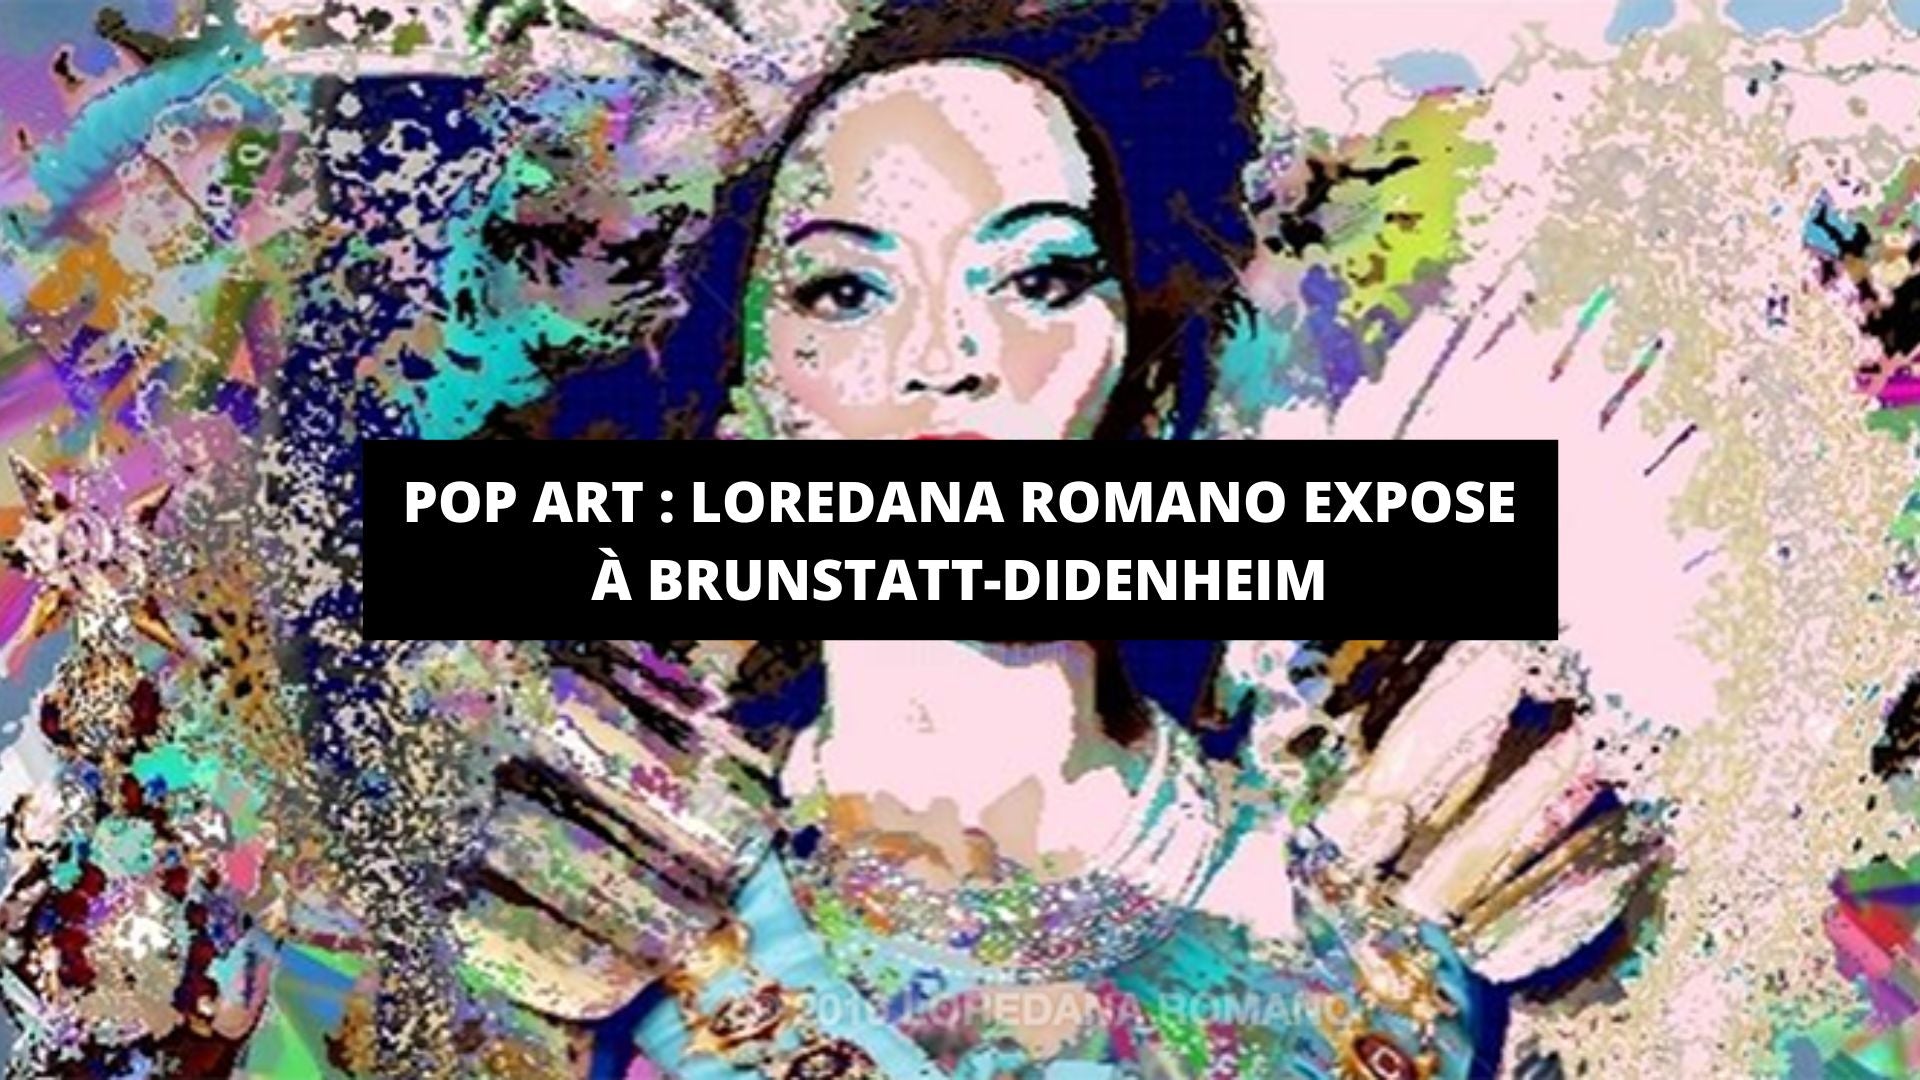 L'Art de Loredana Romano s'invite à Brunstatt-Didenheim - The Art Avenue